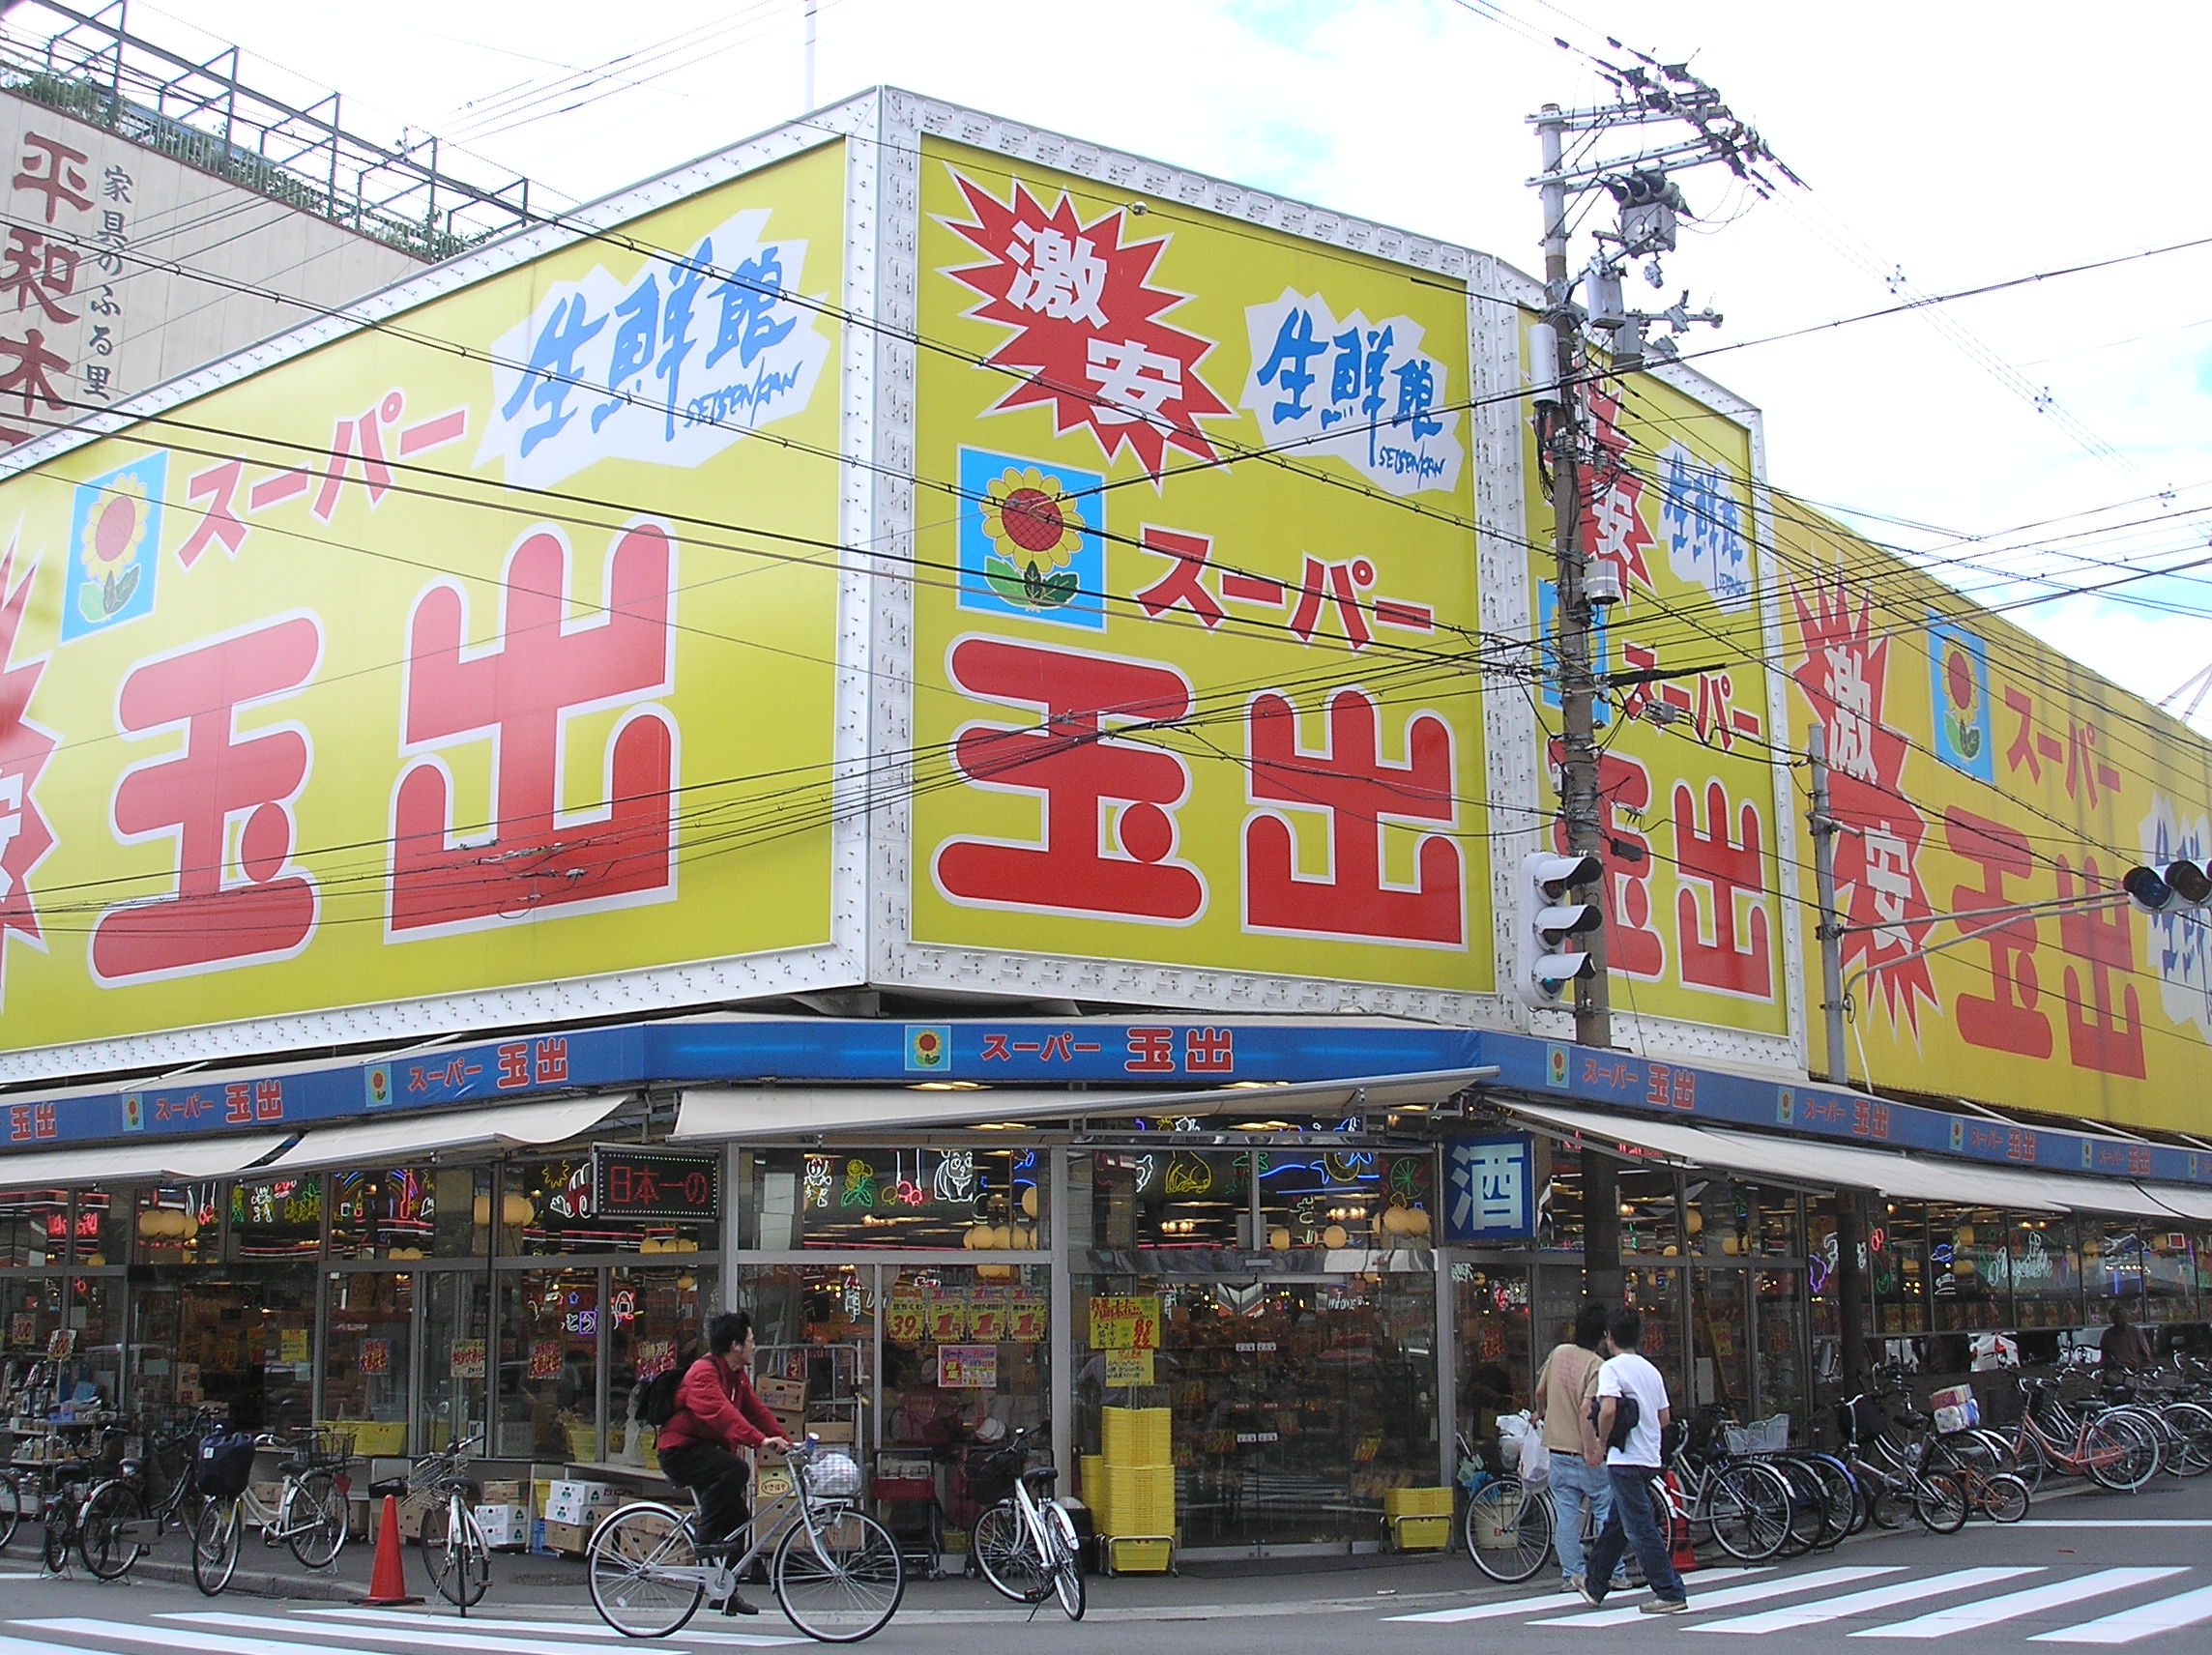 Supermarket. 900m to Super Tamade Imazato store (Super)